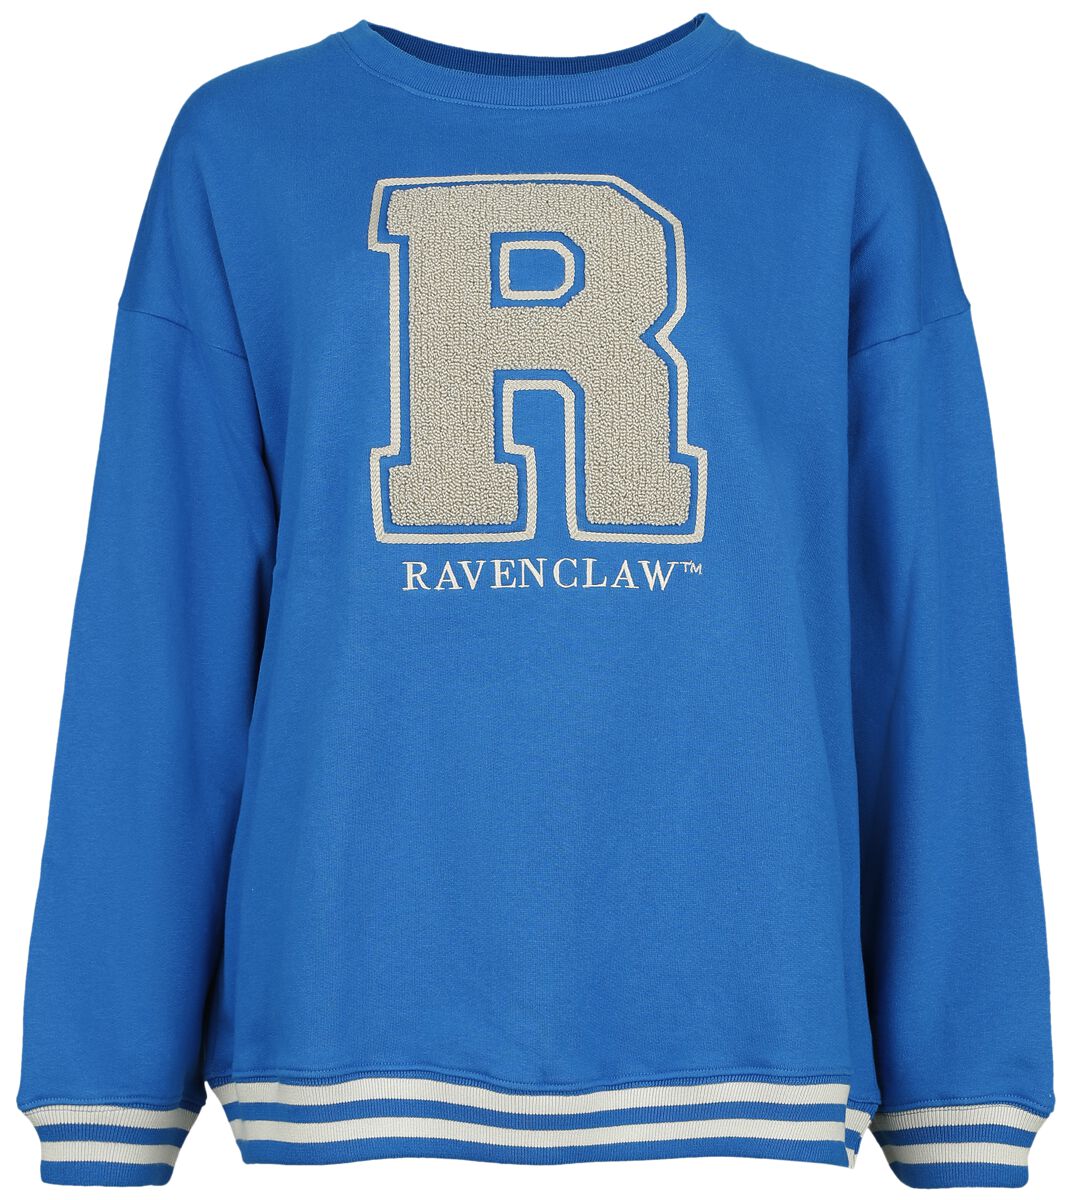 Harry Potter Ravenclaw Sweatshirt blau in S